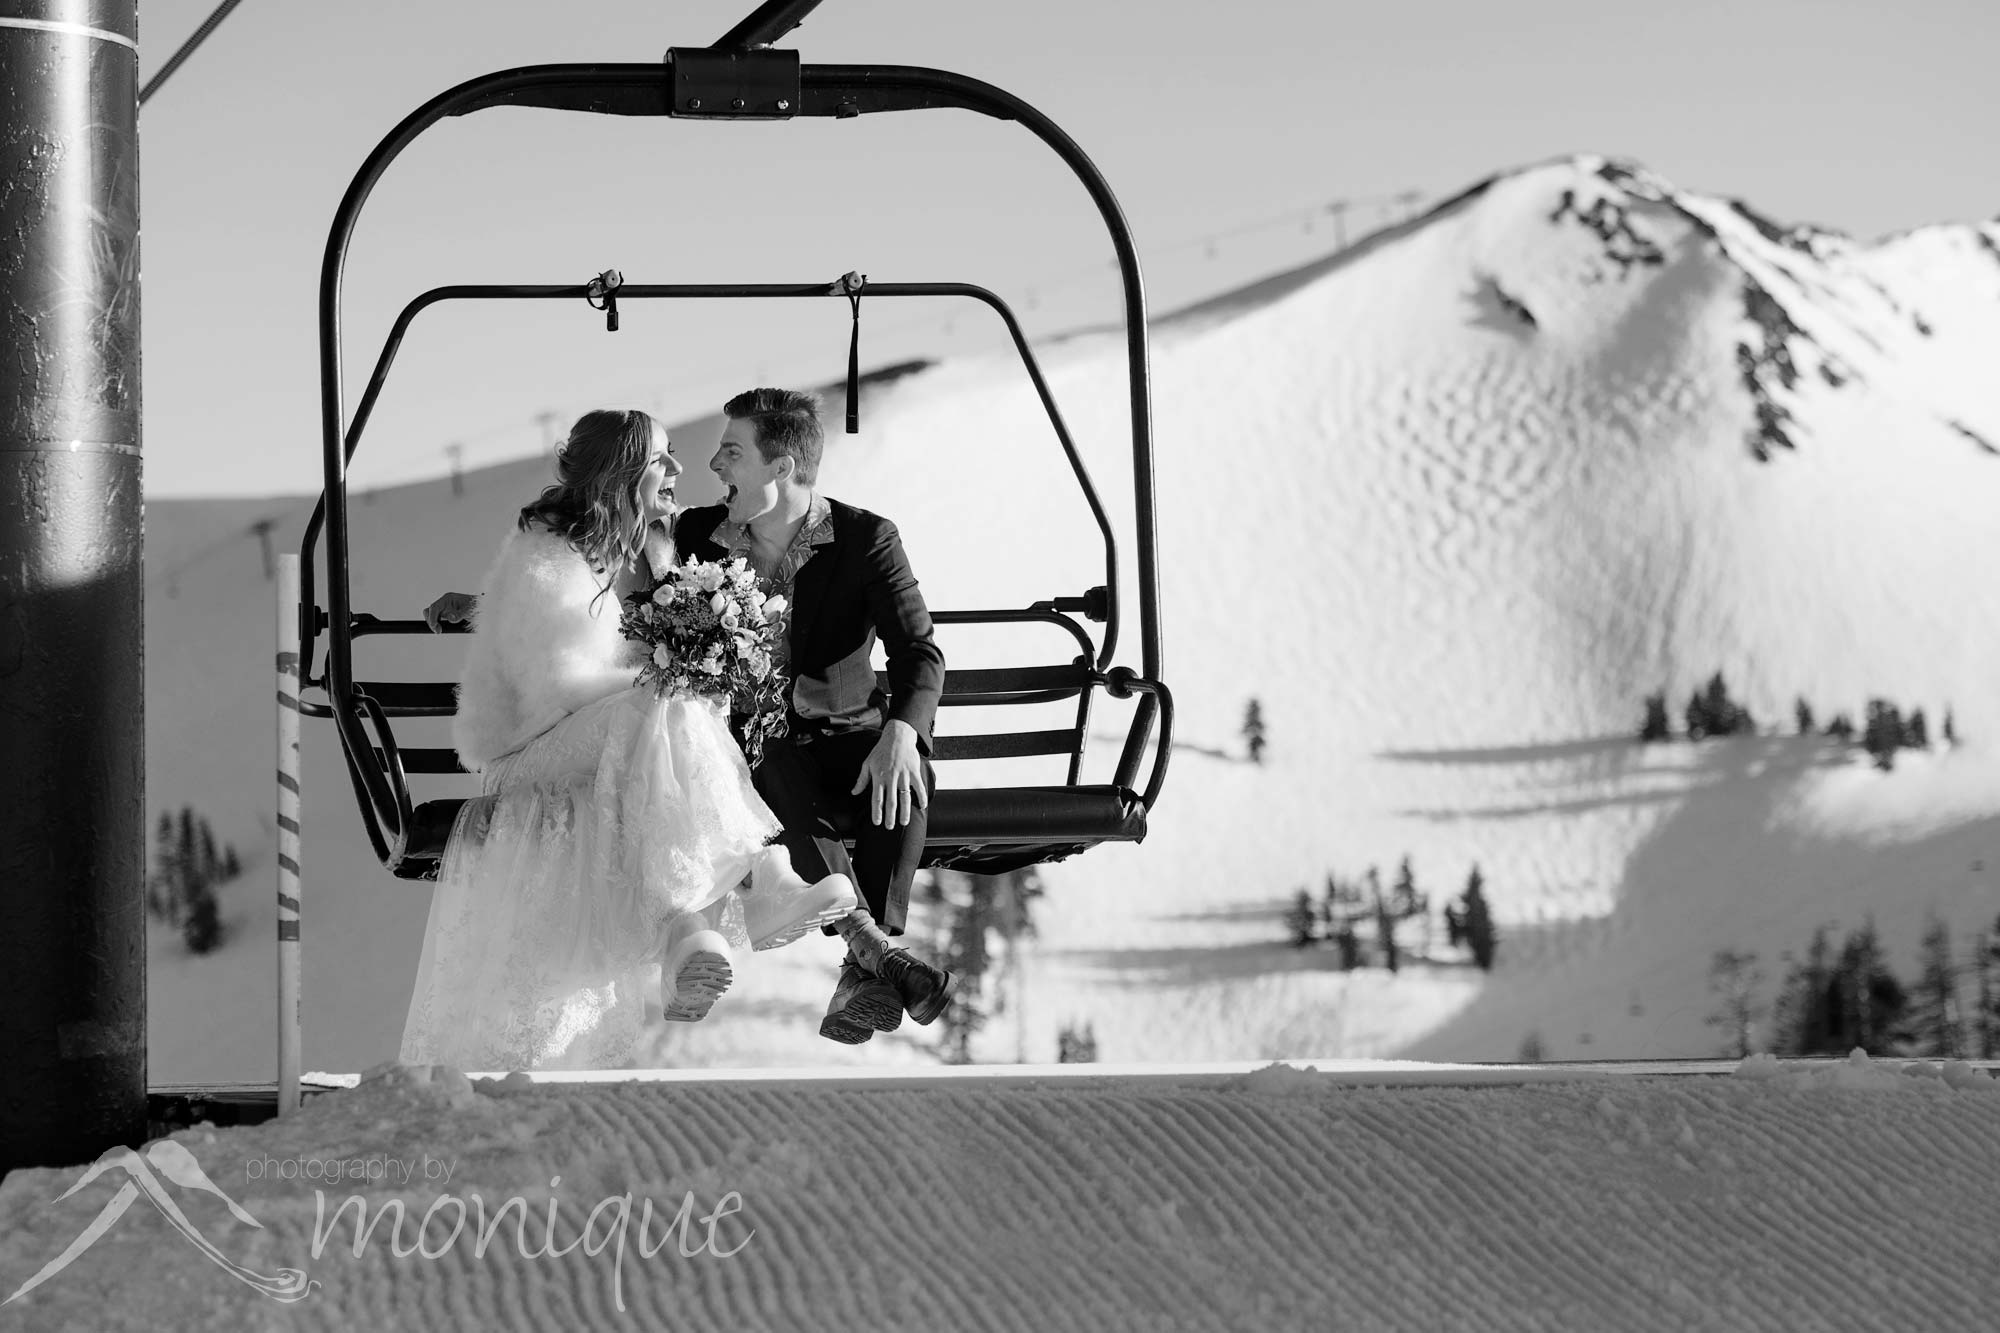 Lake Tahoe wedding photography, Palisades High Camp wedding, Emma and Danny, winter wedding, snow